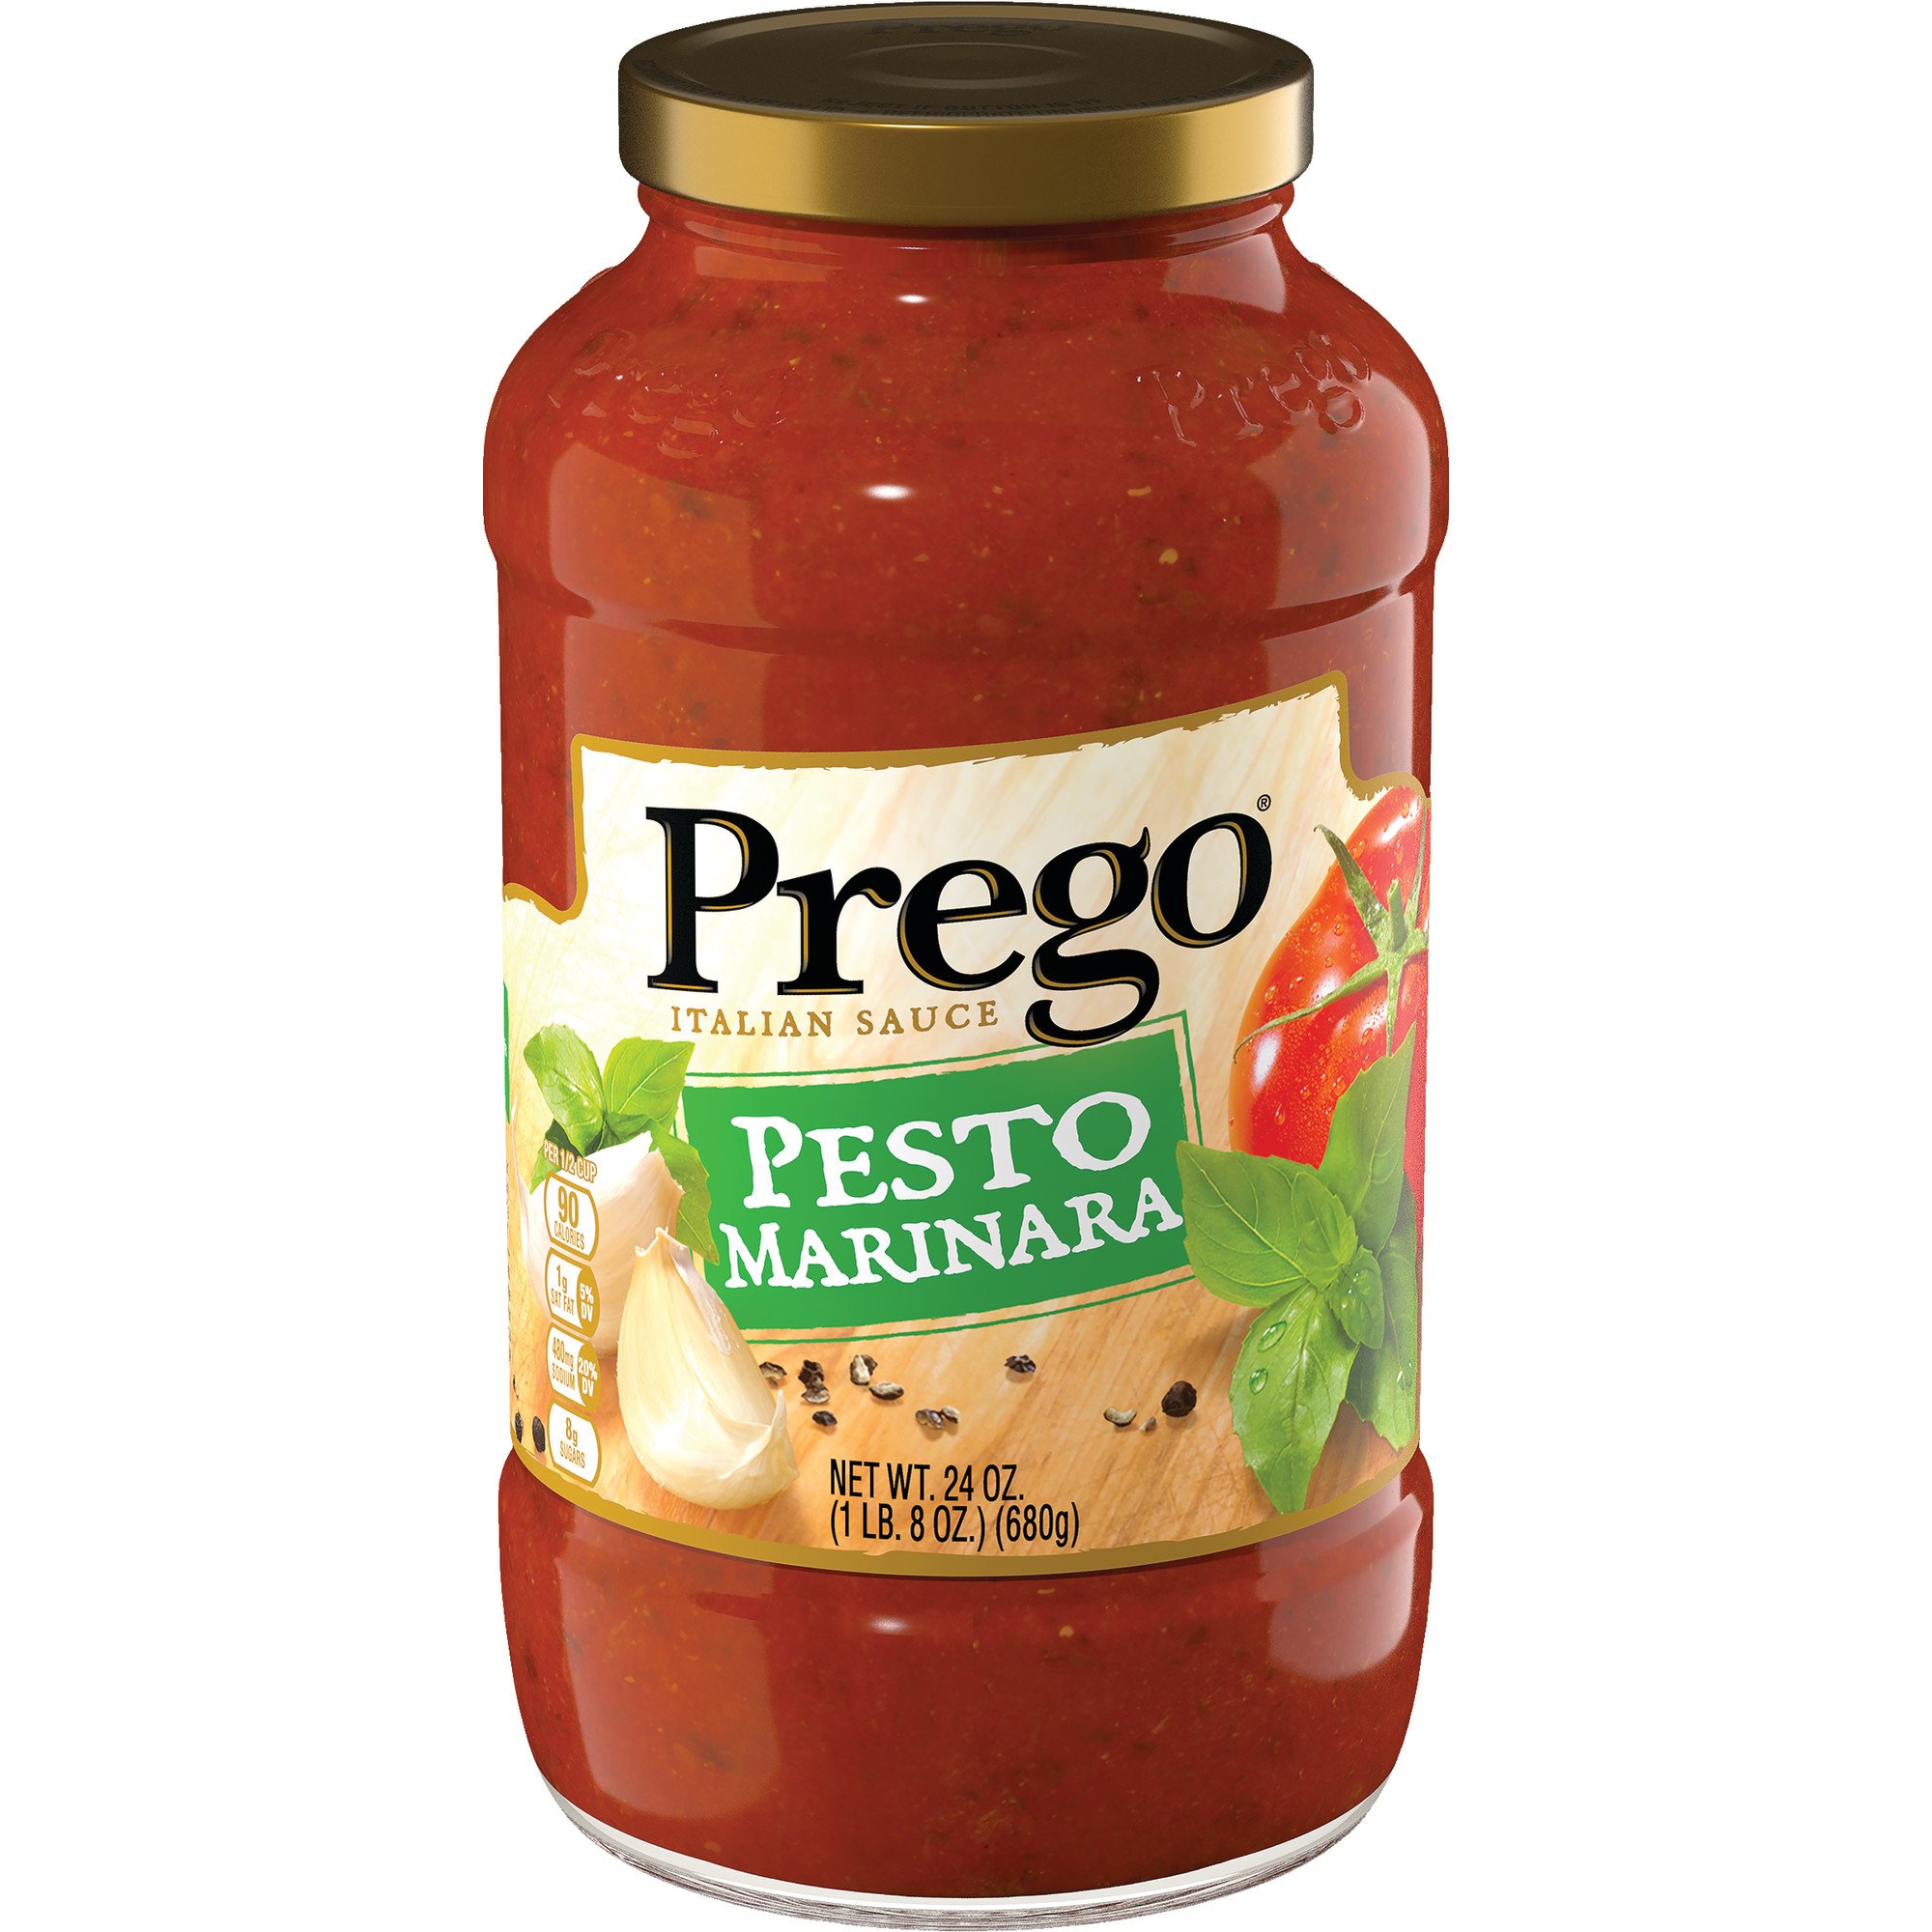 Prego Pesto Marinara Italian Sauce, 24 oz.